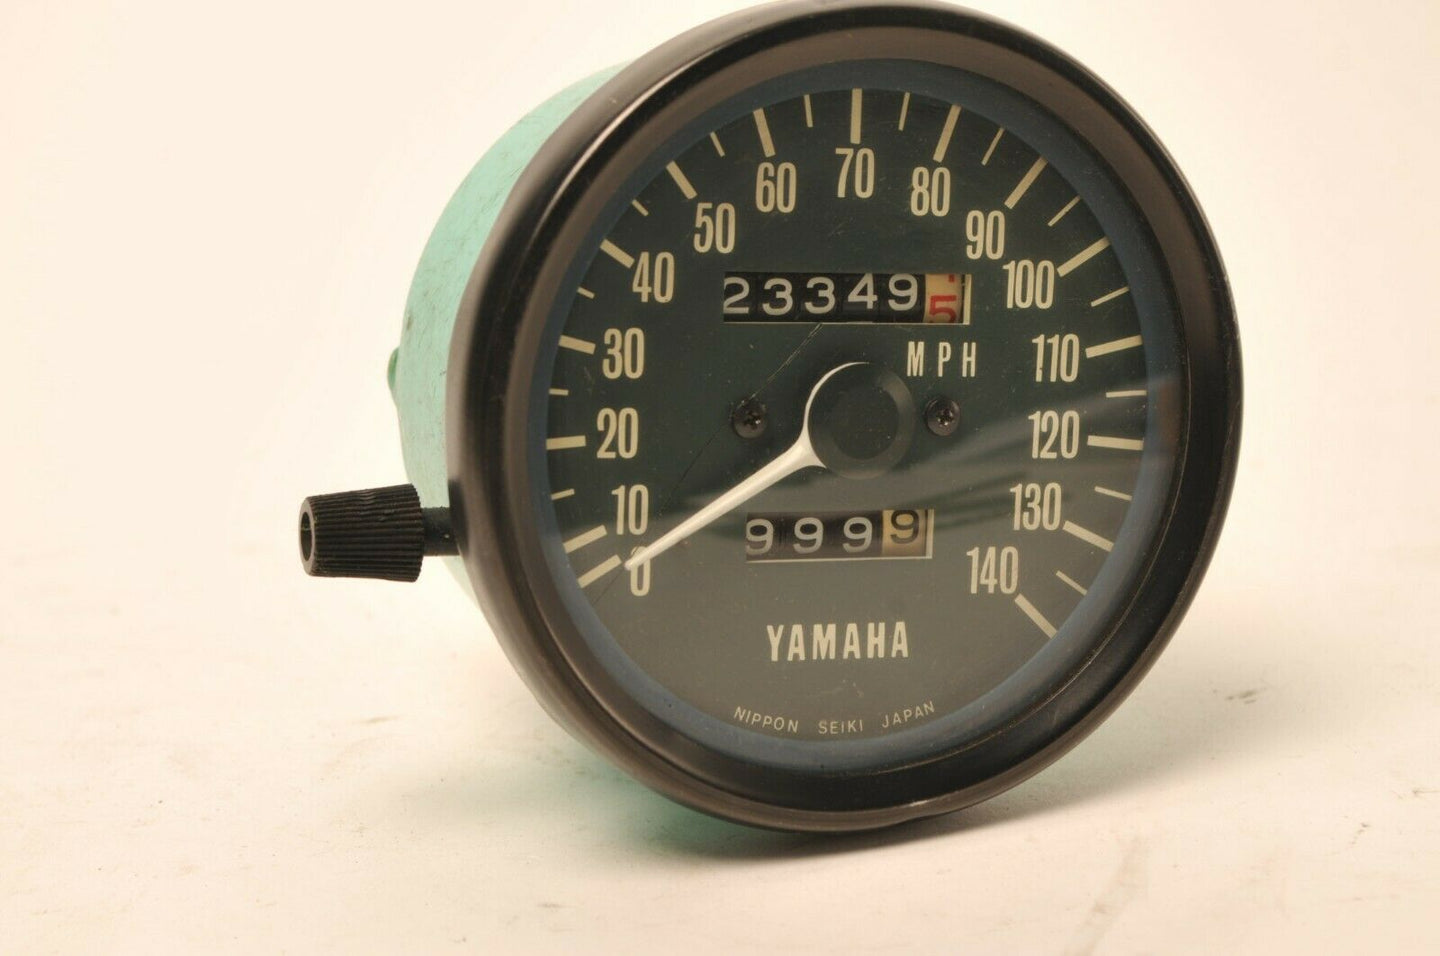 Yamaha XS750 Speedometer Speedo Gauge 1J3-83570-71-00 23349.5 Miles 140MPH